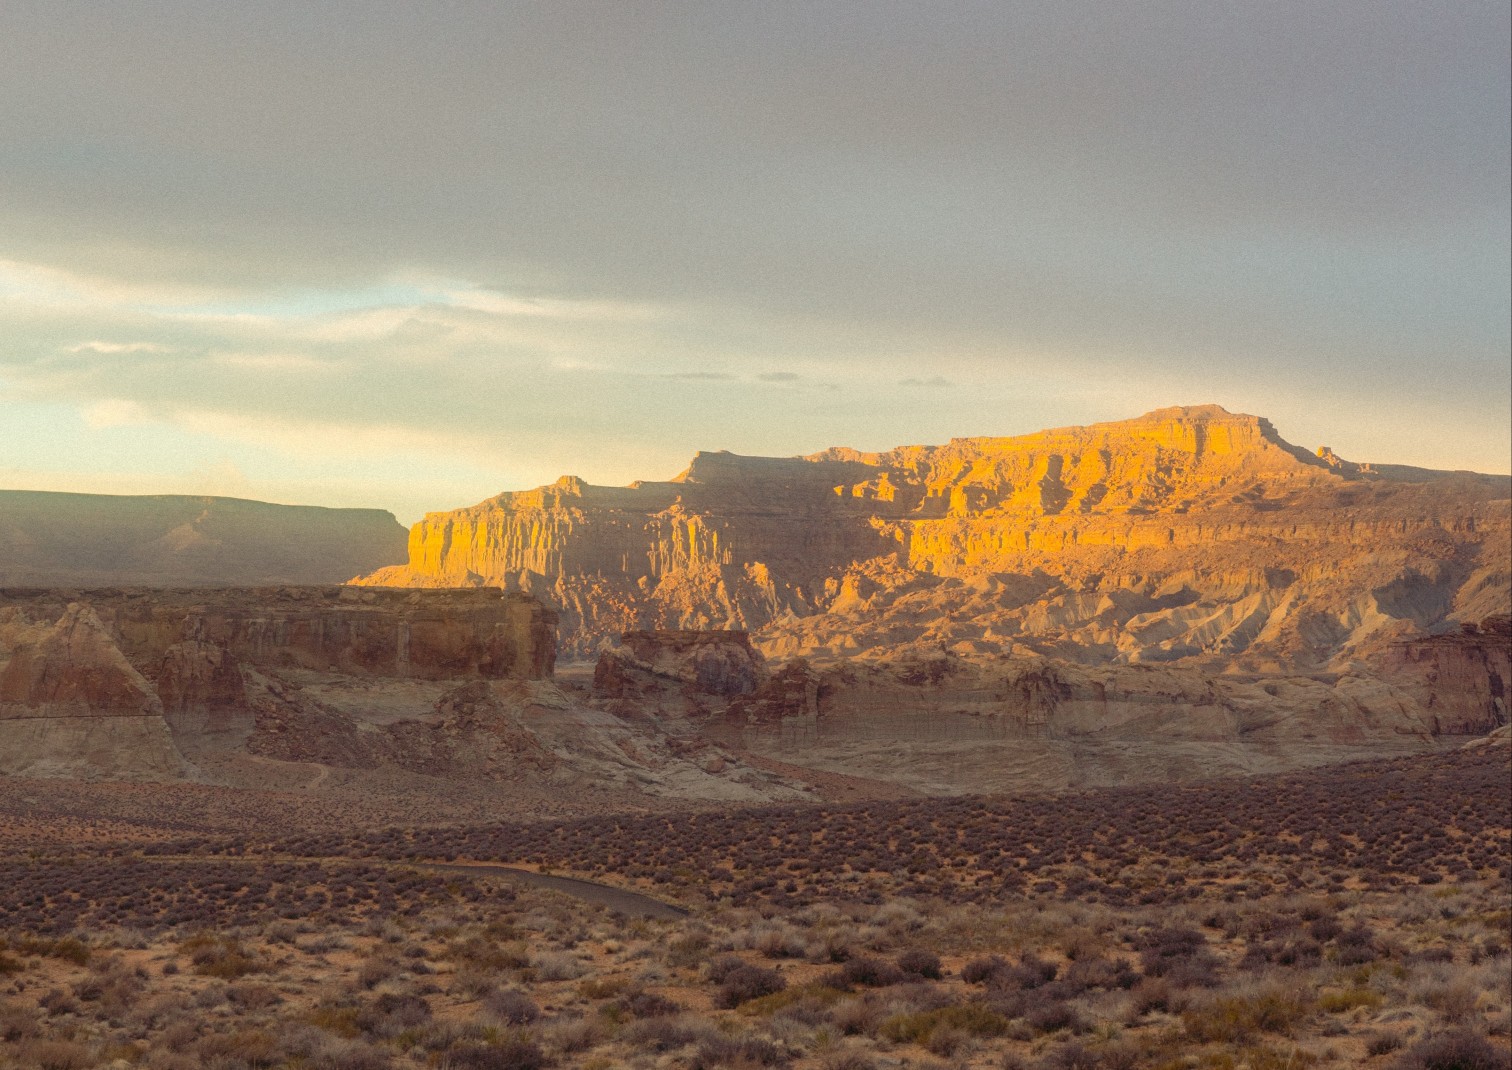 Desert and cliffs during sunset